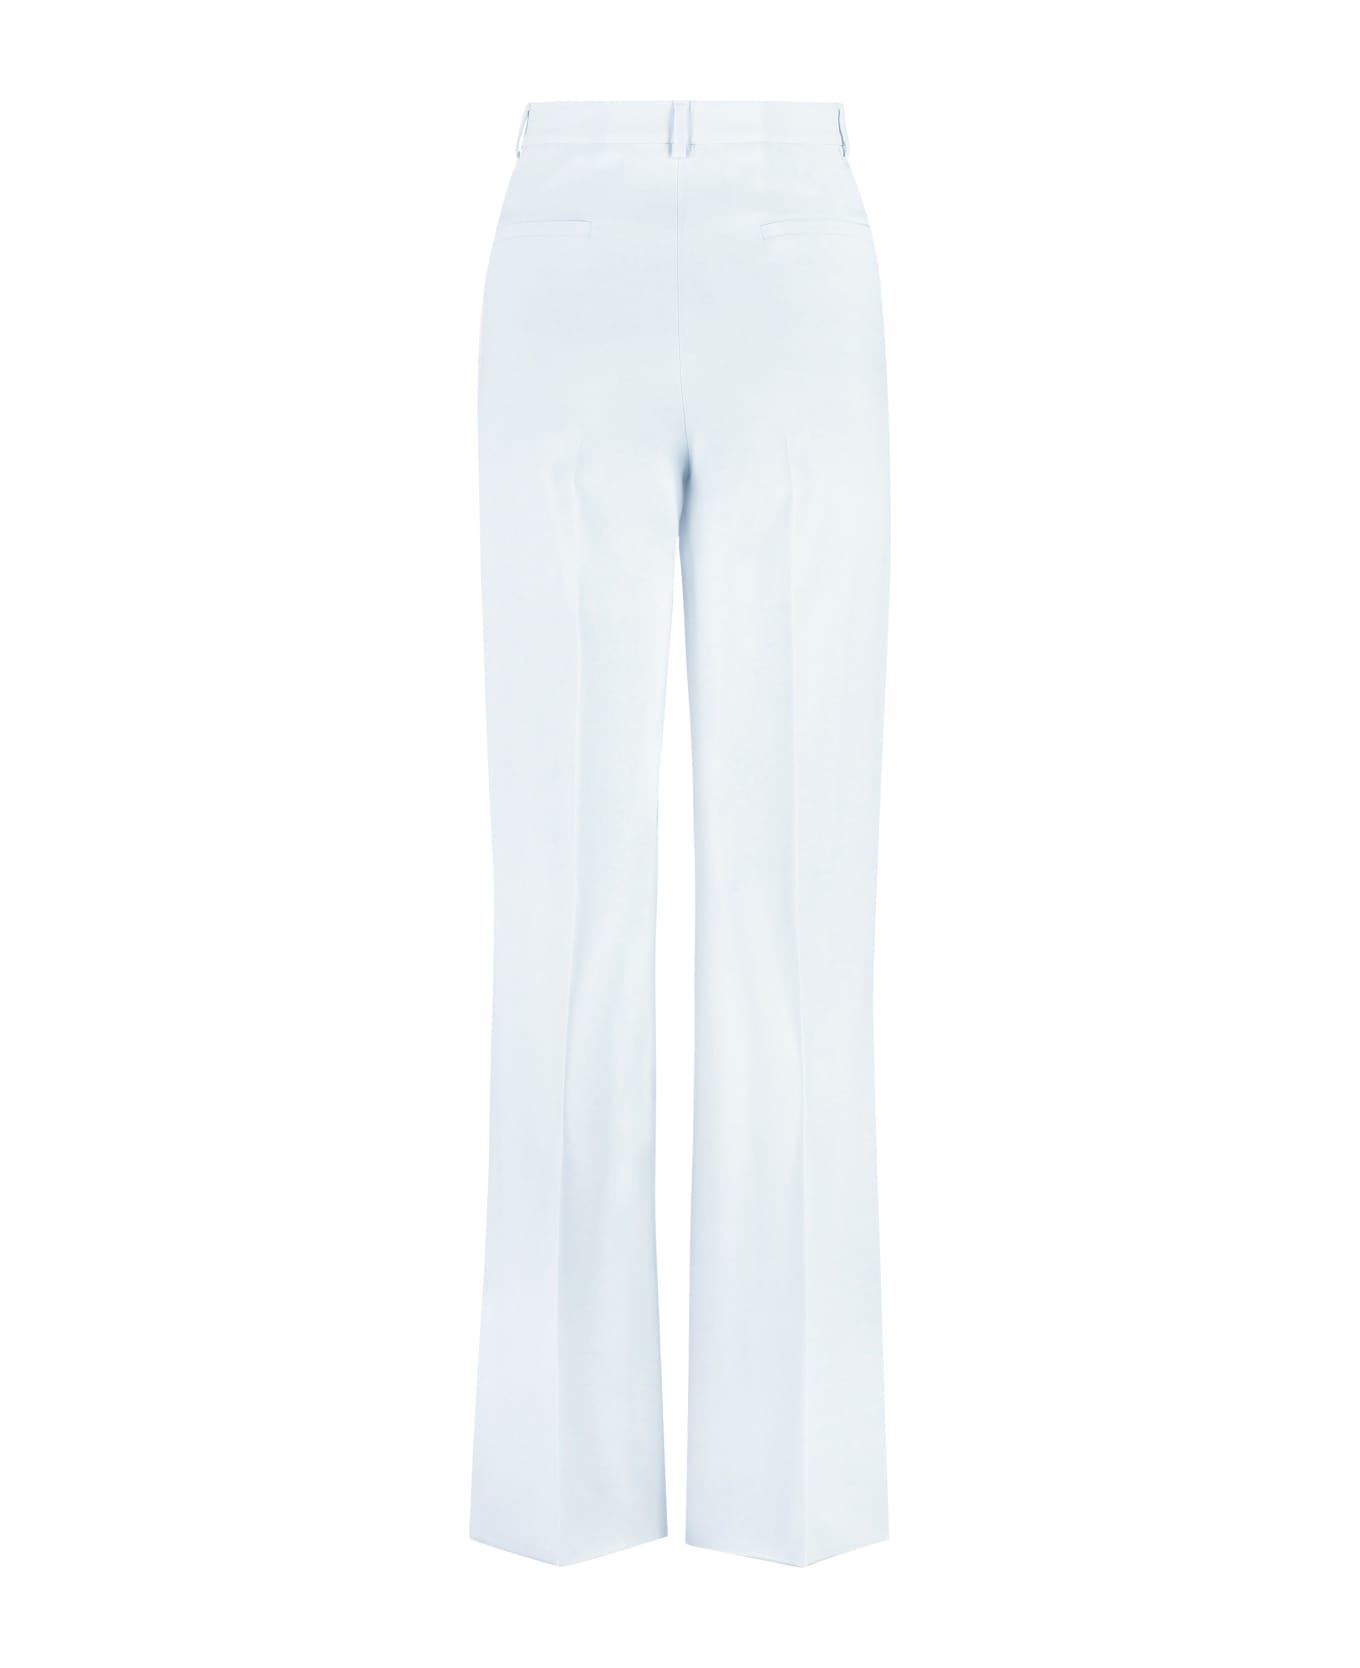 Giorgio Armani Tailored Trousers - White